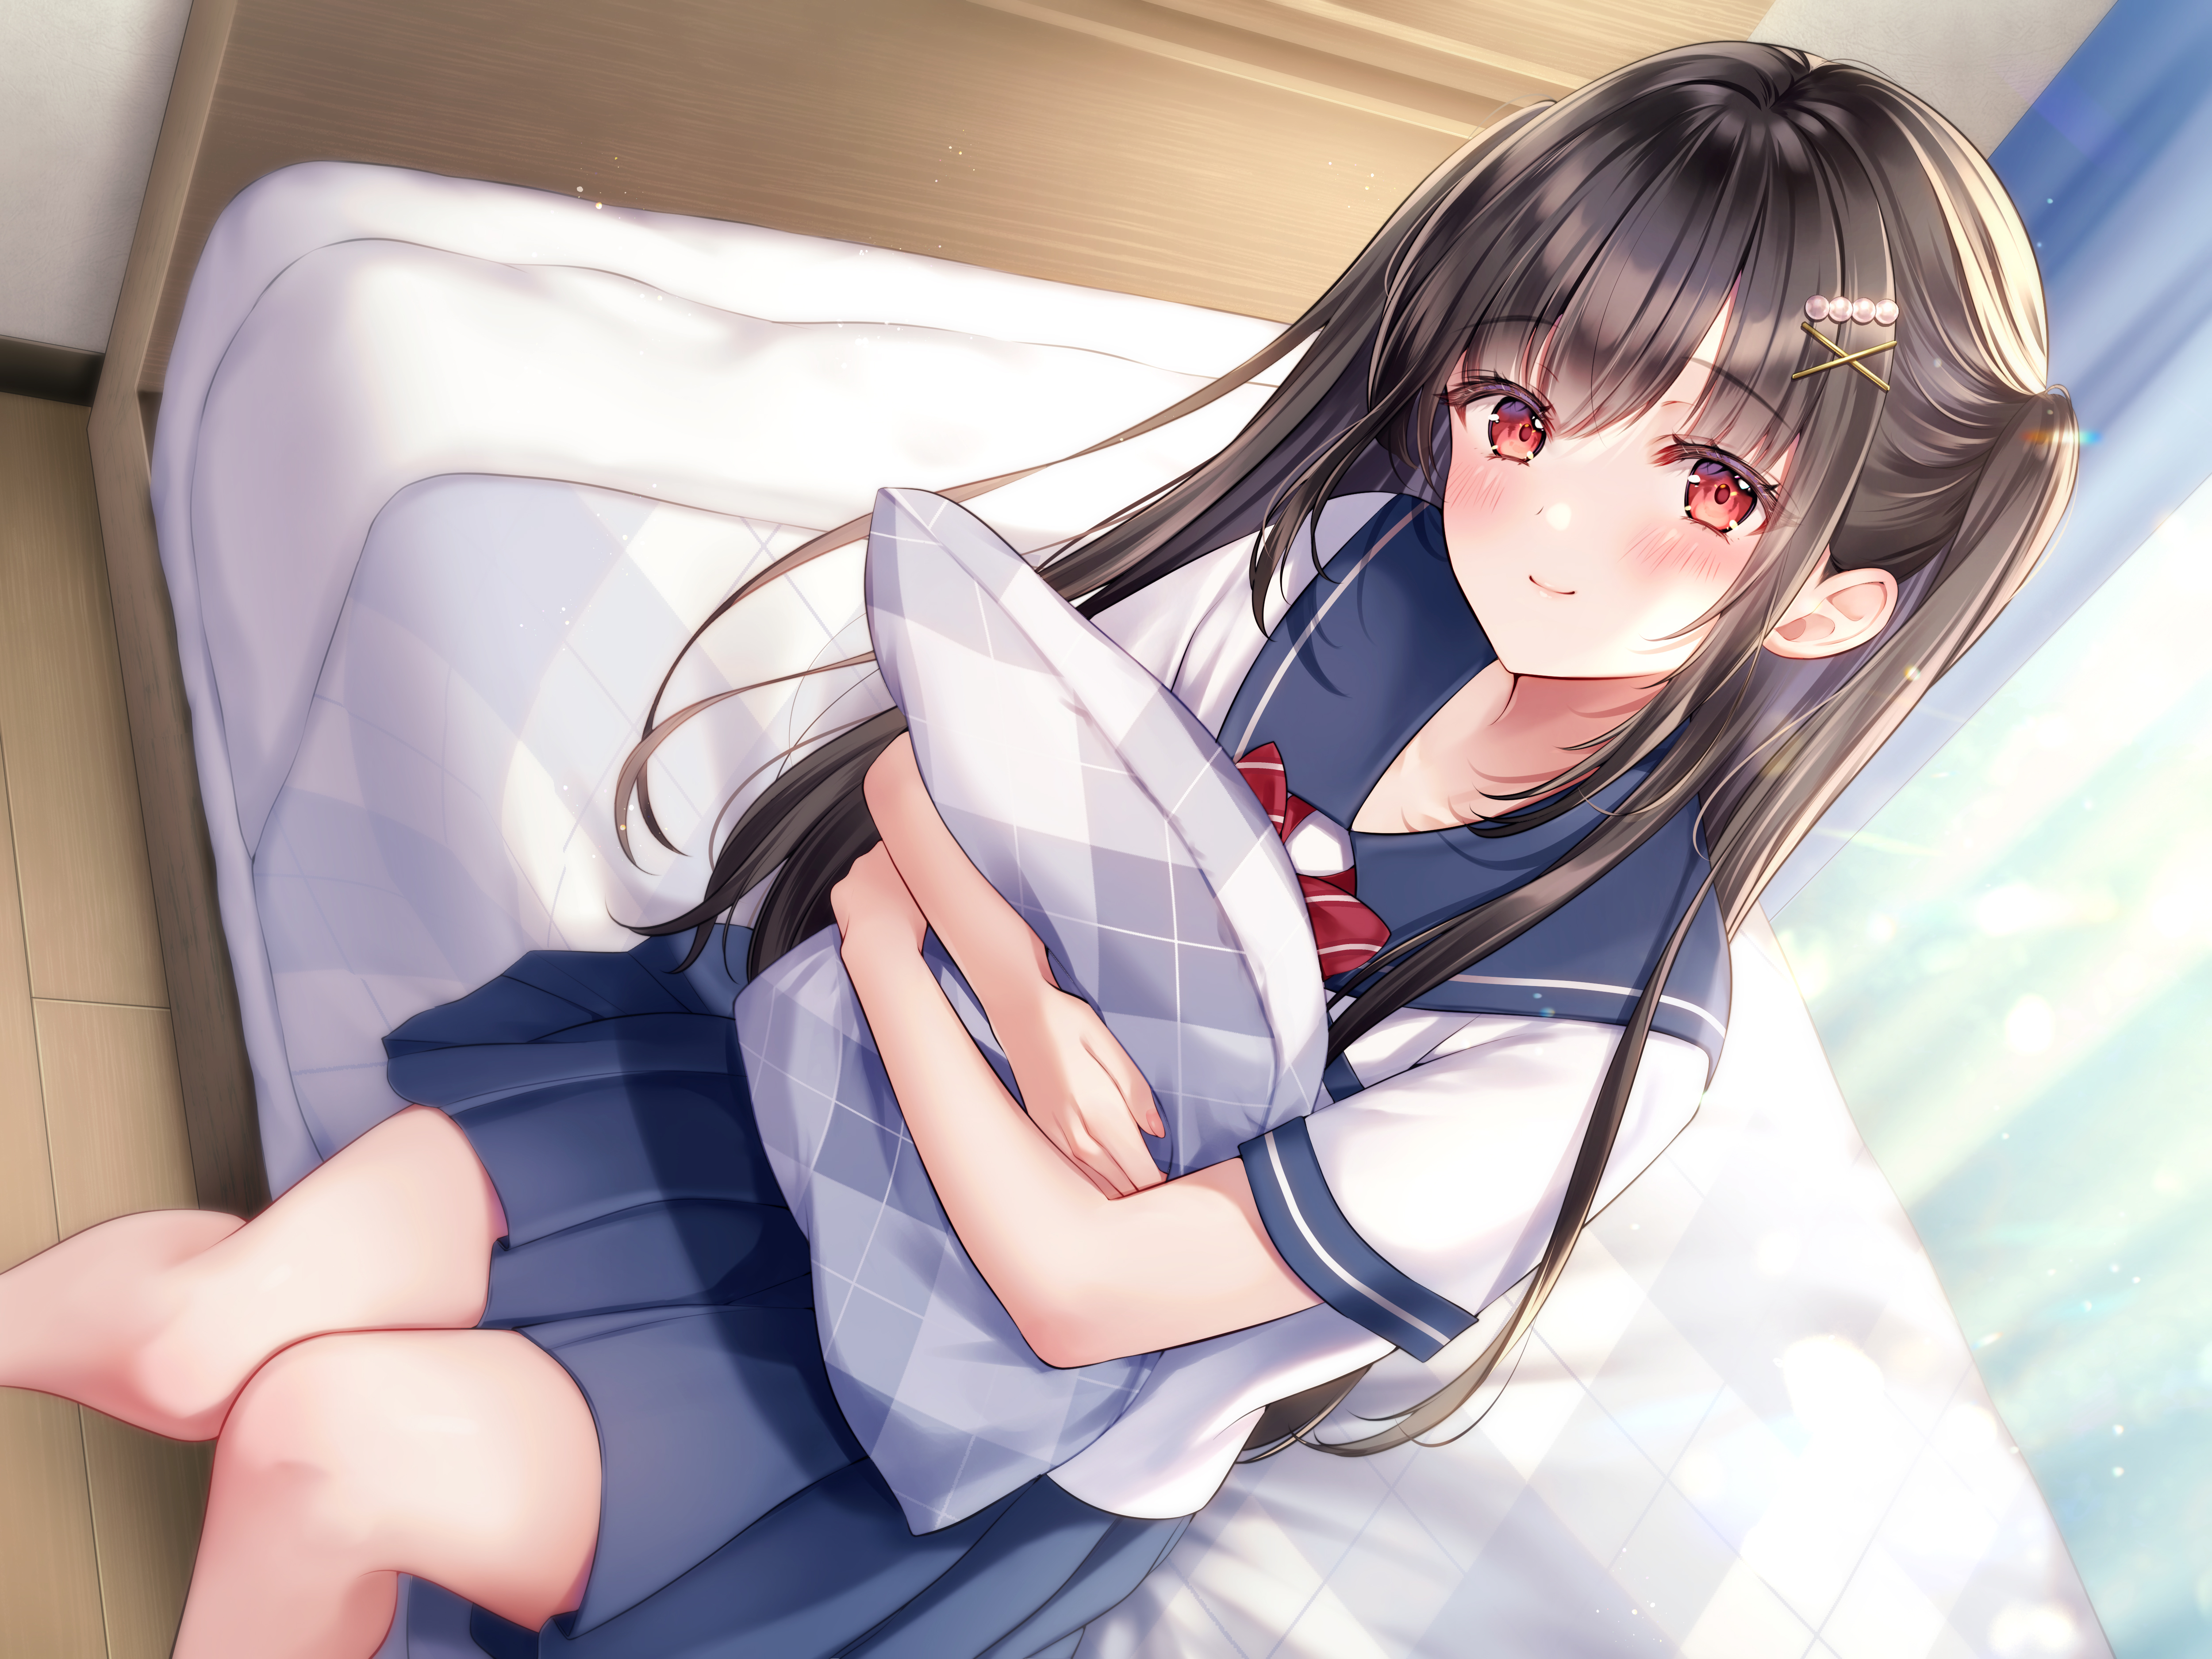 Anime Anime Girls High Angle In Bedroom Schoolgirl School Uniform Long Hair Smiling Blushing Looking 5000x3750